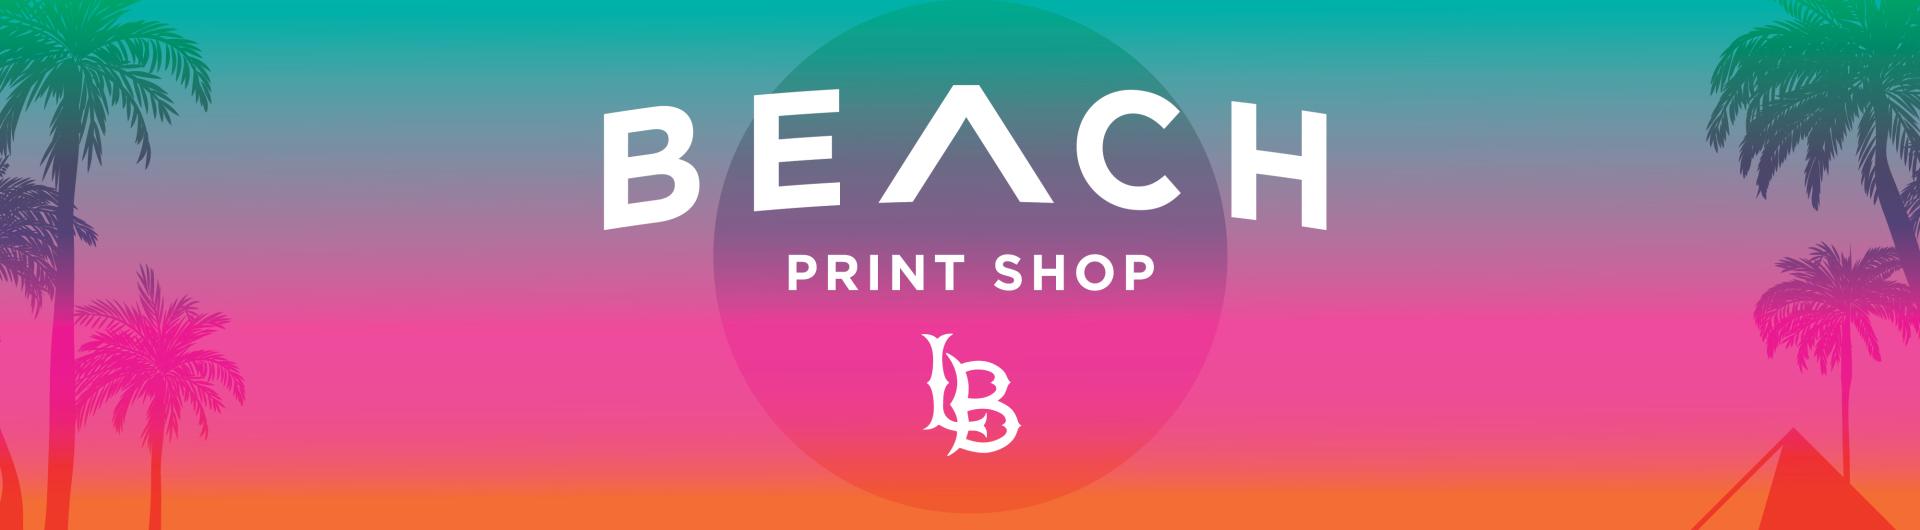 Beach Print Shop summer banner